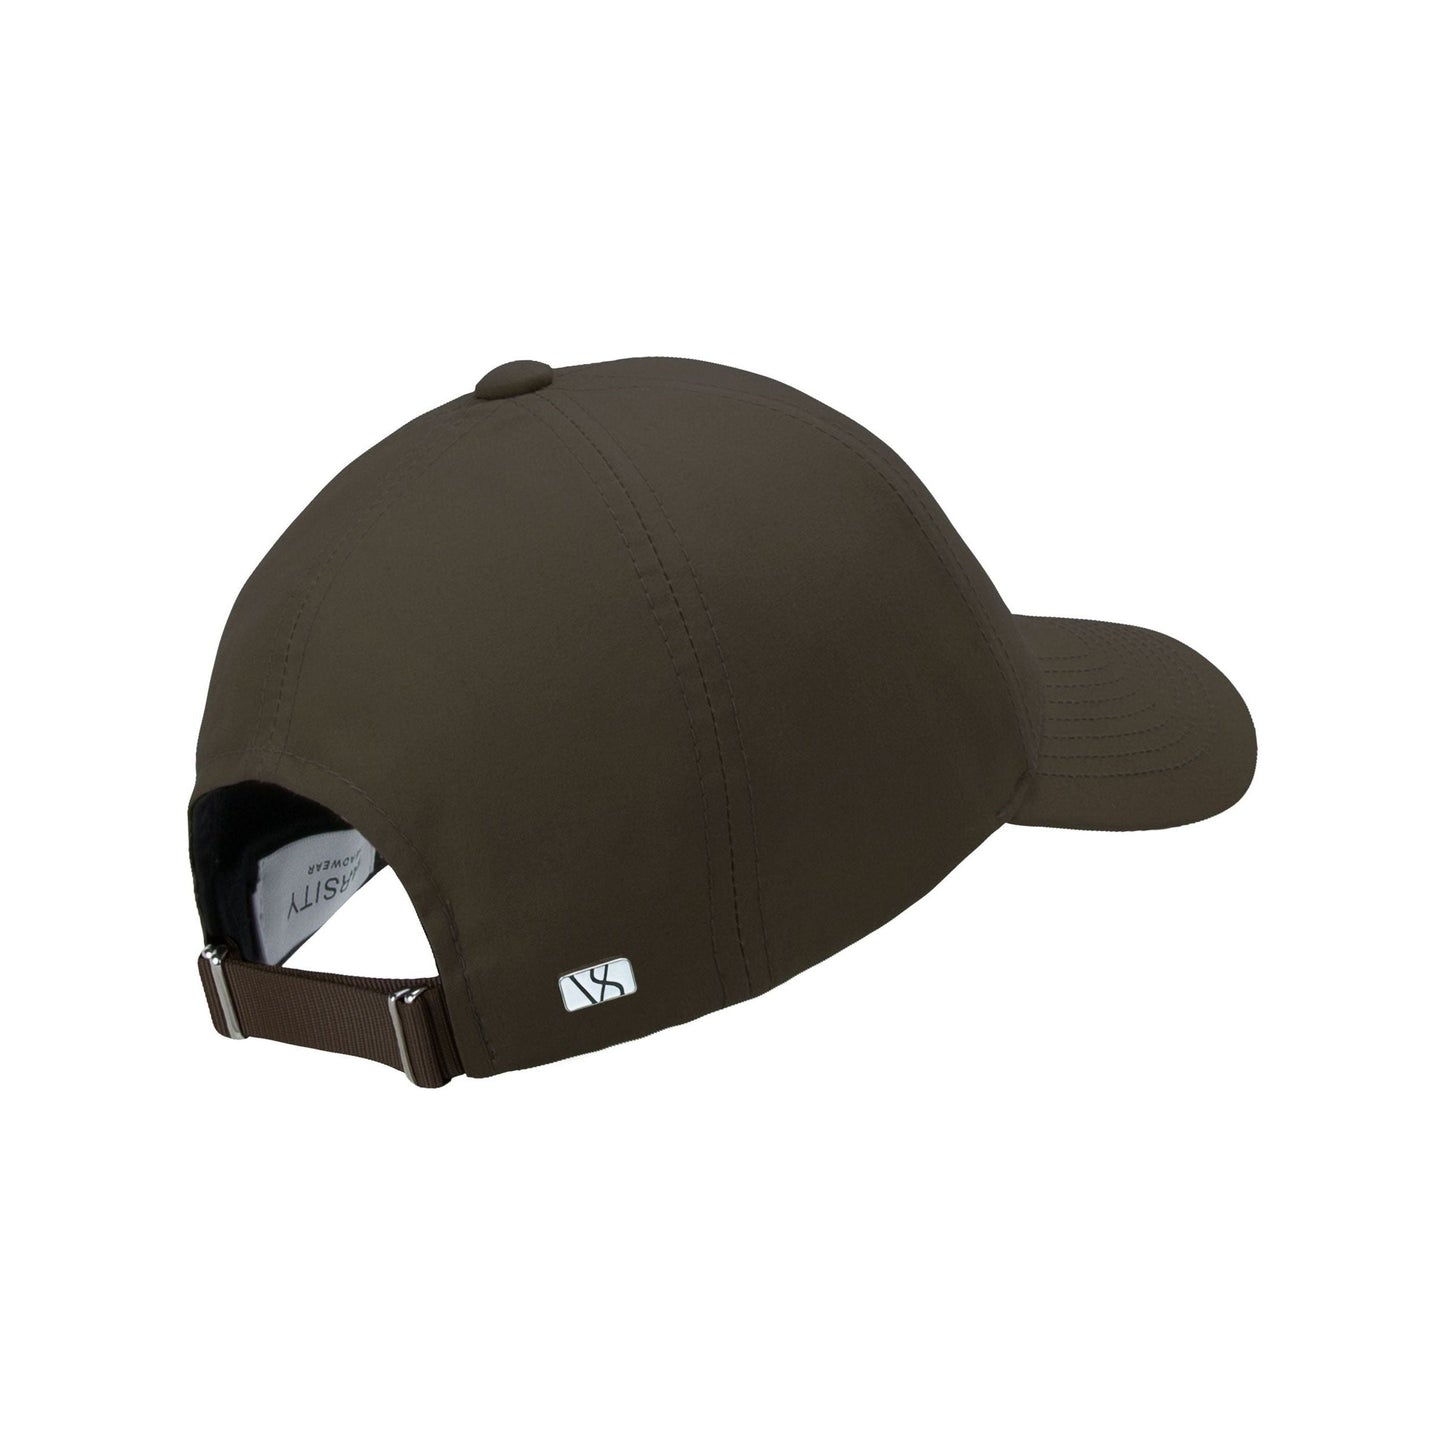 Varsity Headwear Baseball Cap Ventile Cotton Cap, Leather Brown